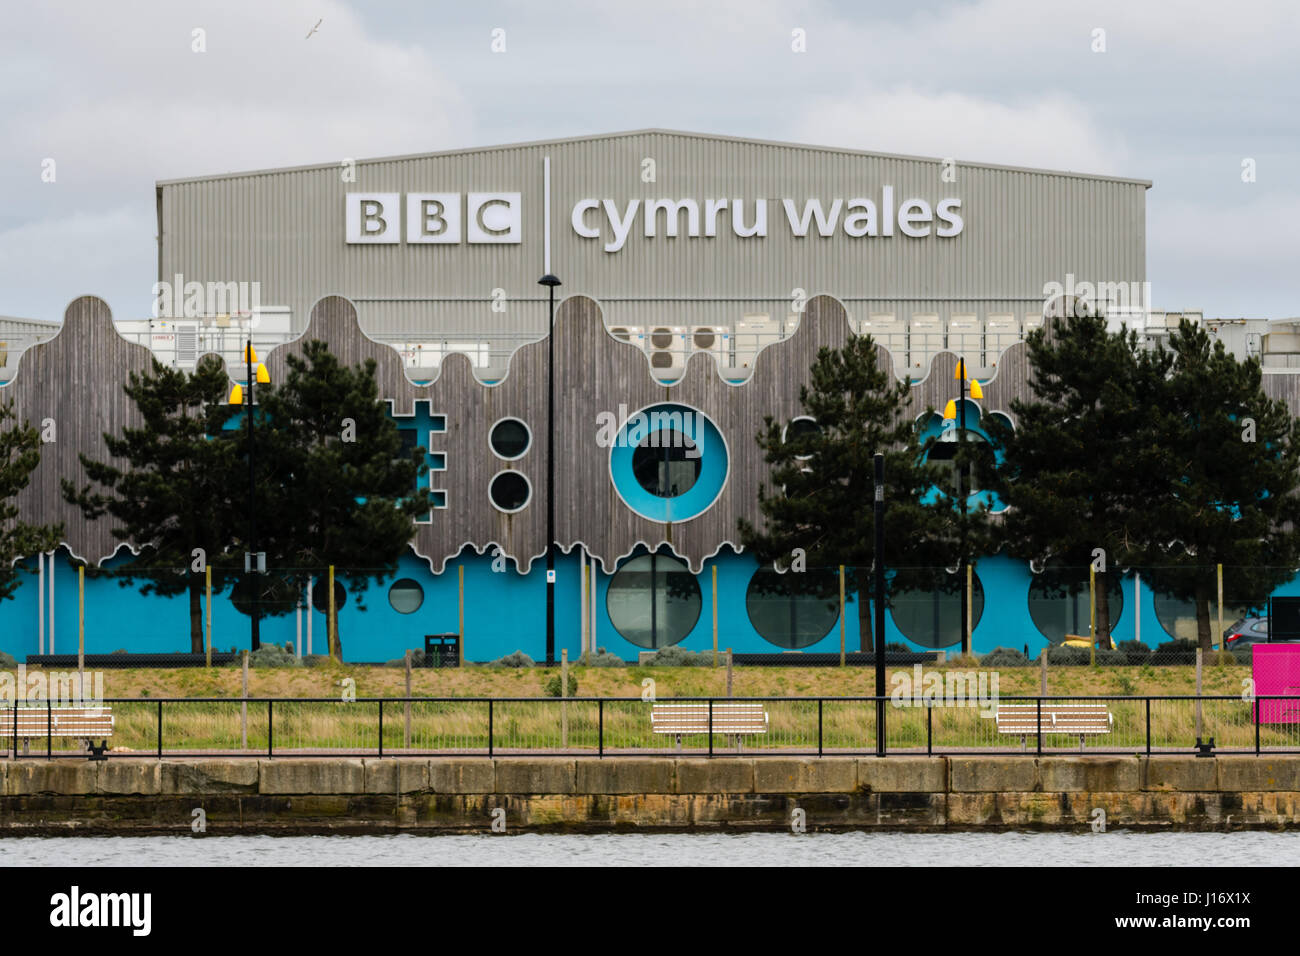 BBC Cymru Wales Roath Lock Studios. Television production facility in Roath Basin at the Porth Teigr area of Cardiff Bay Stock Photo